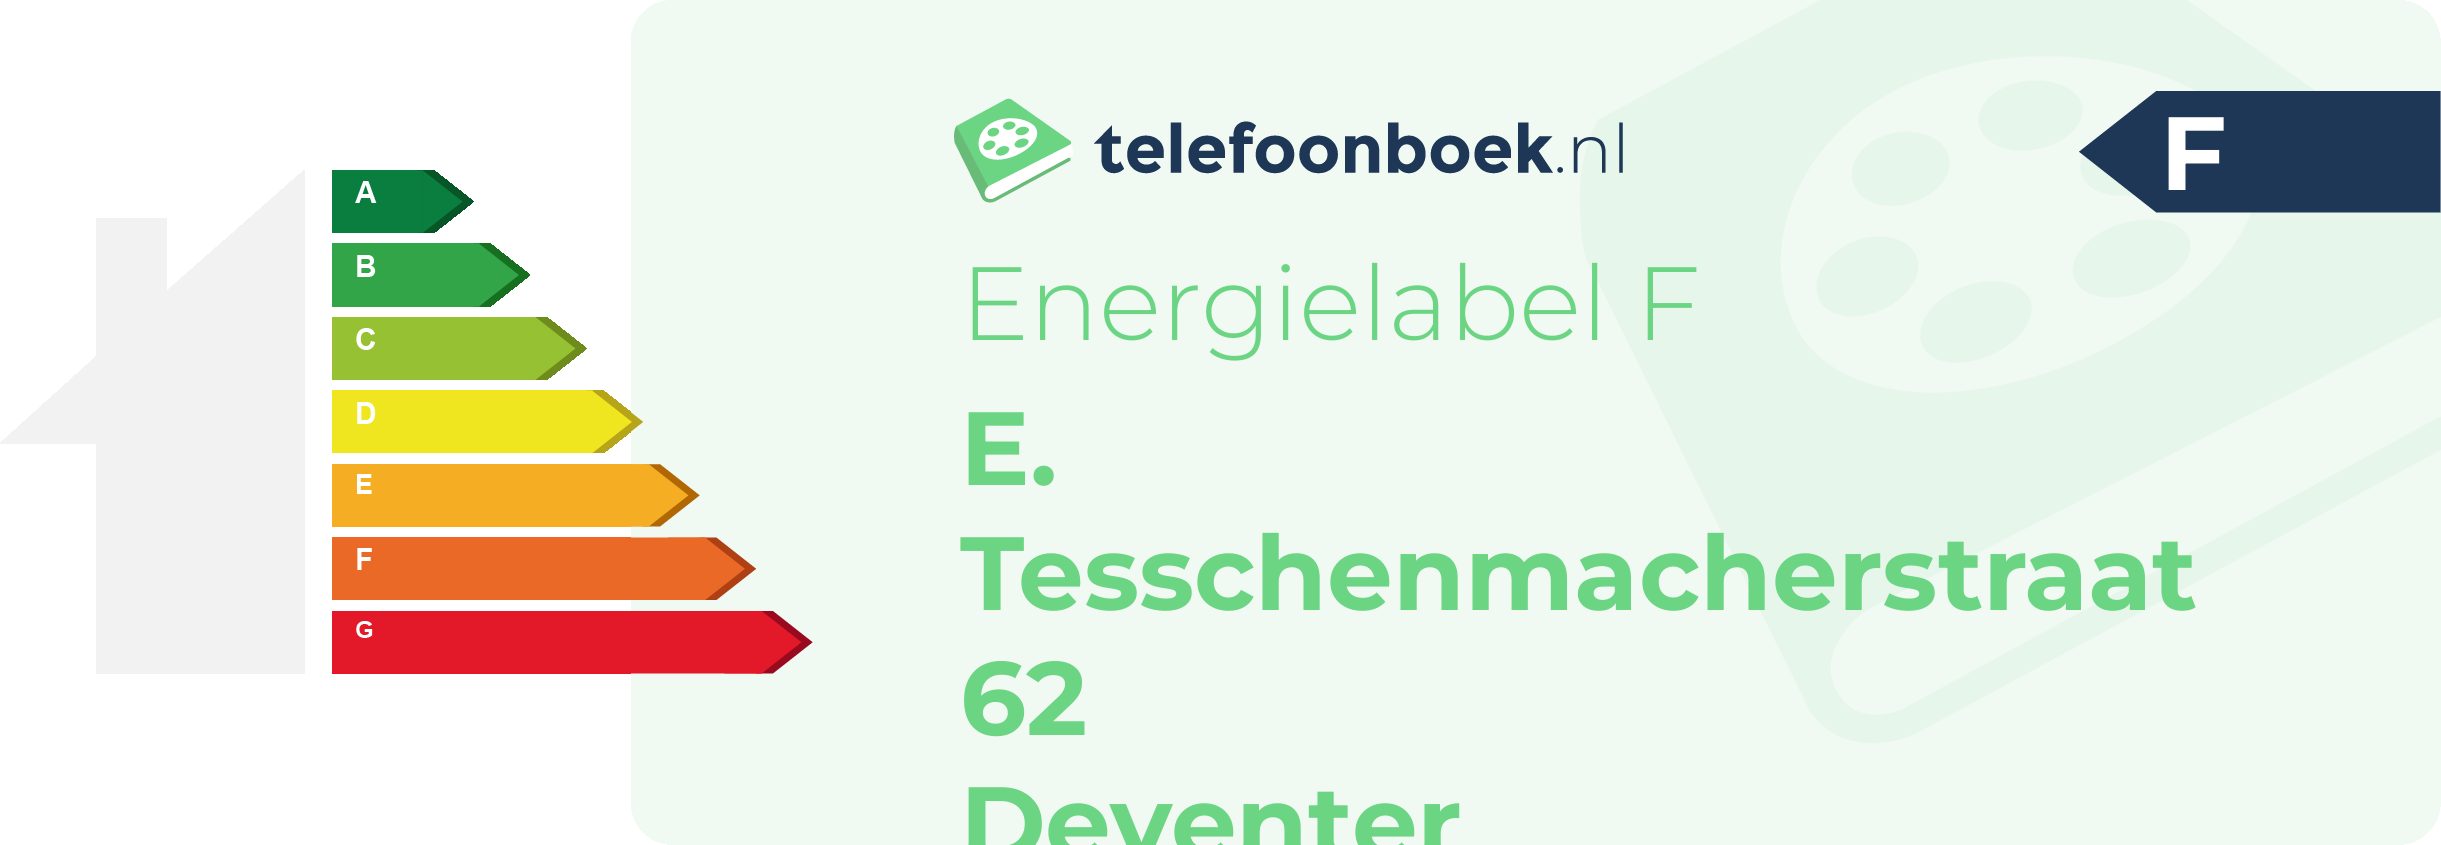 Energielabel E. Tesschenmacherstraat 62 Deventer